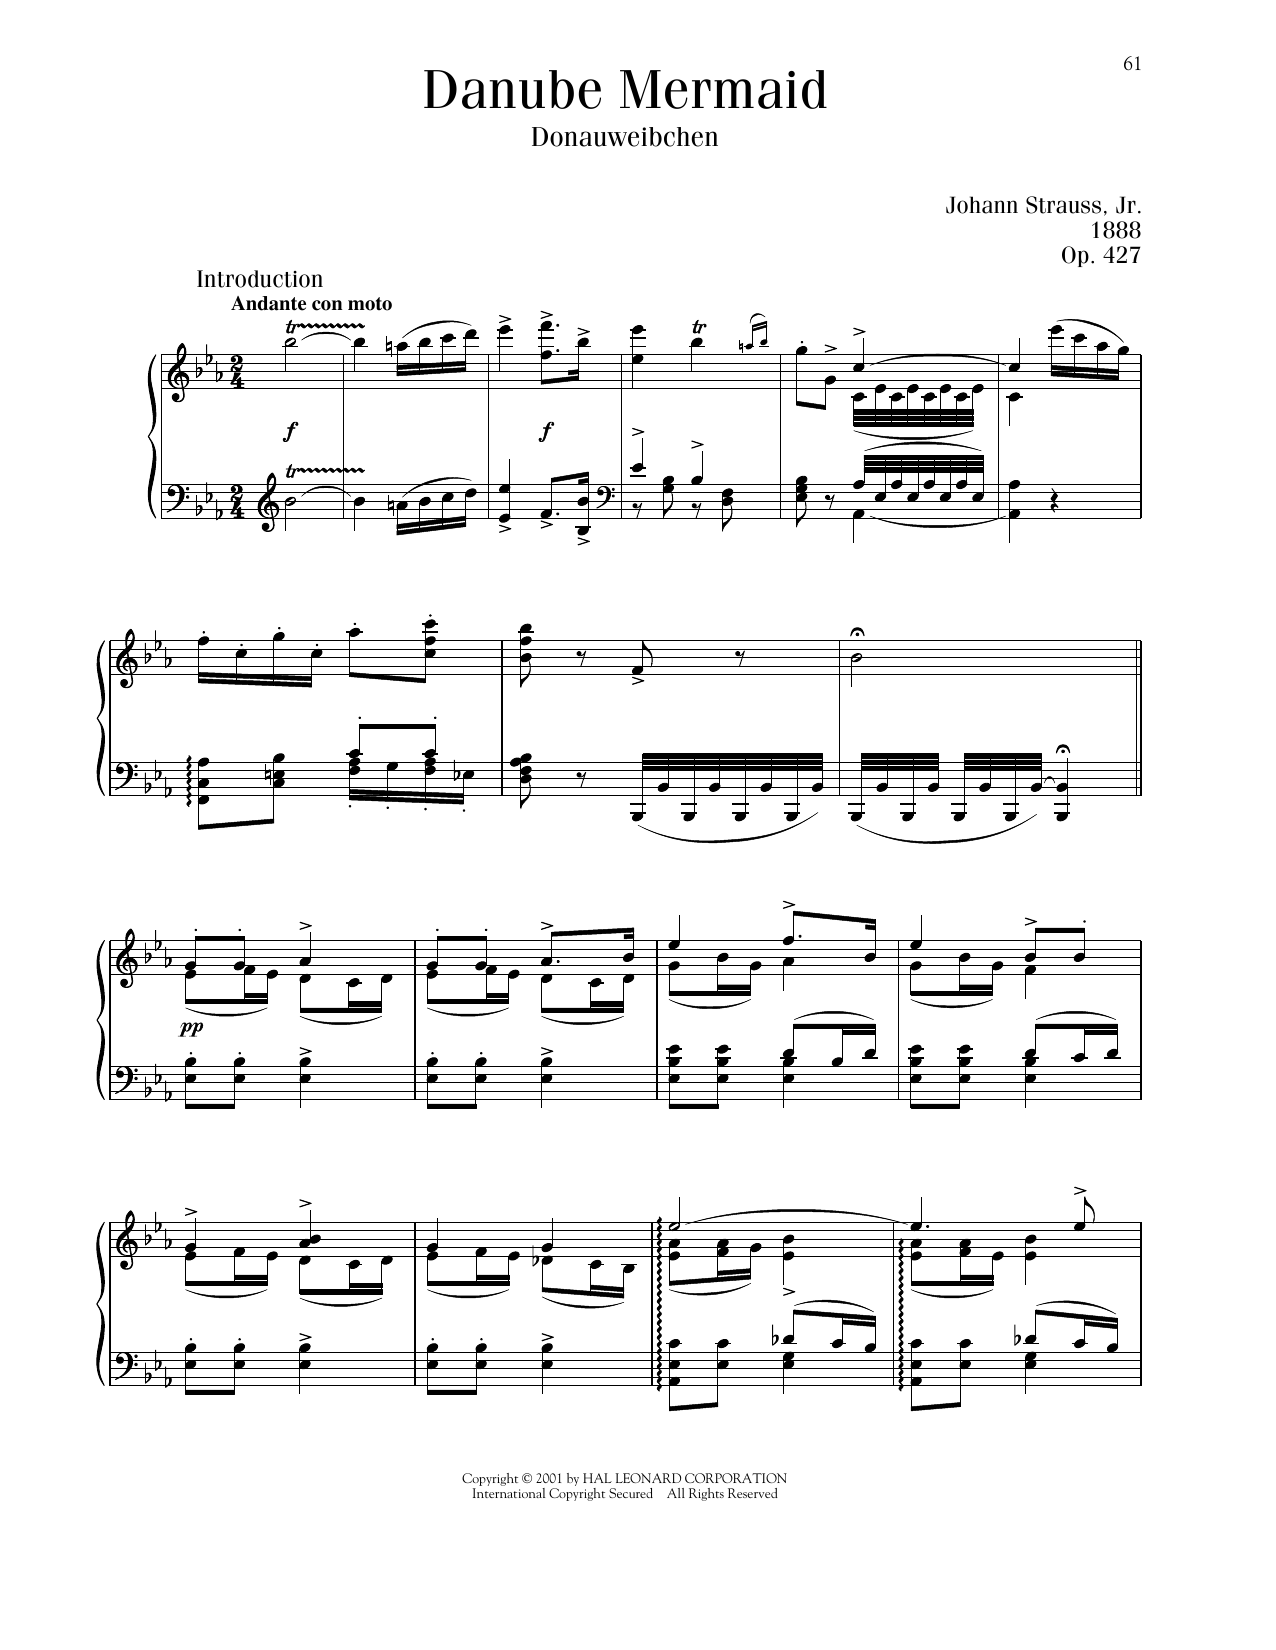 Johann Strauss Danube Mermaid, Op. 427 sheet music notes printable PDF score